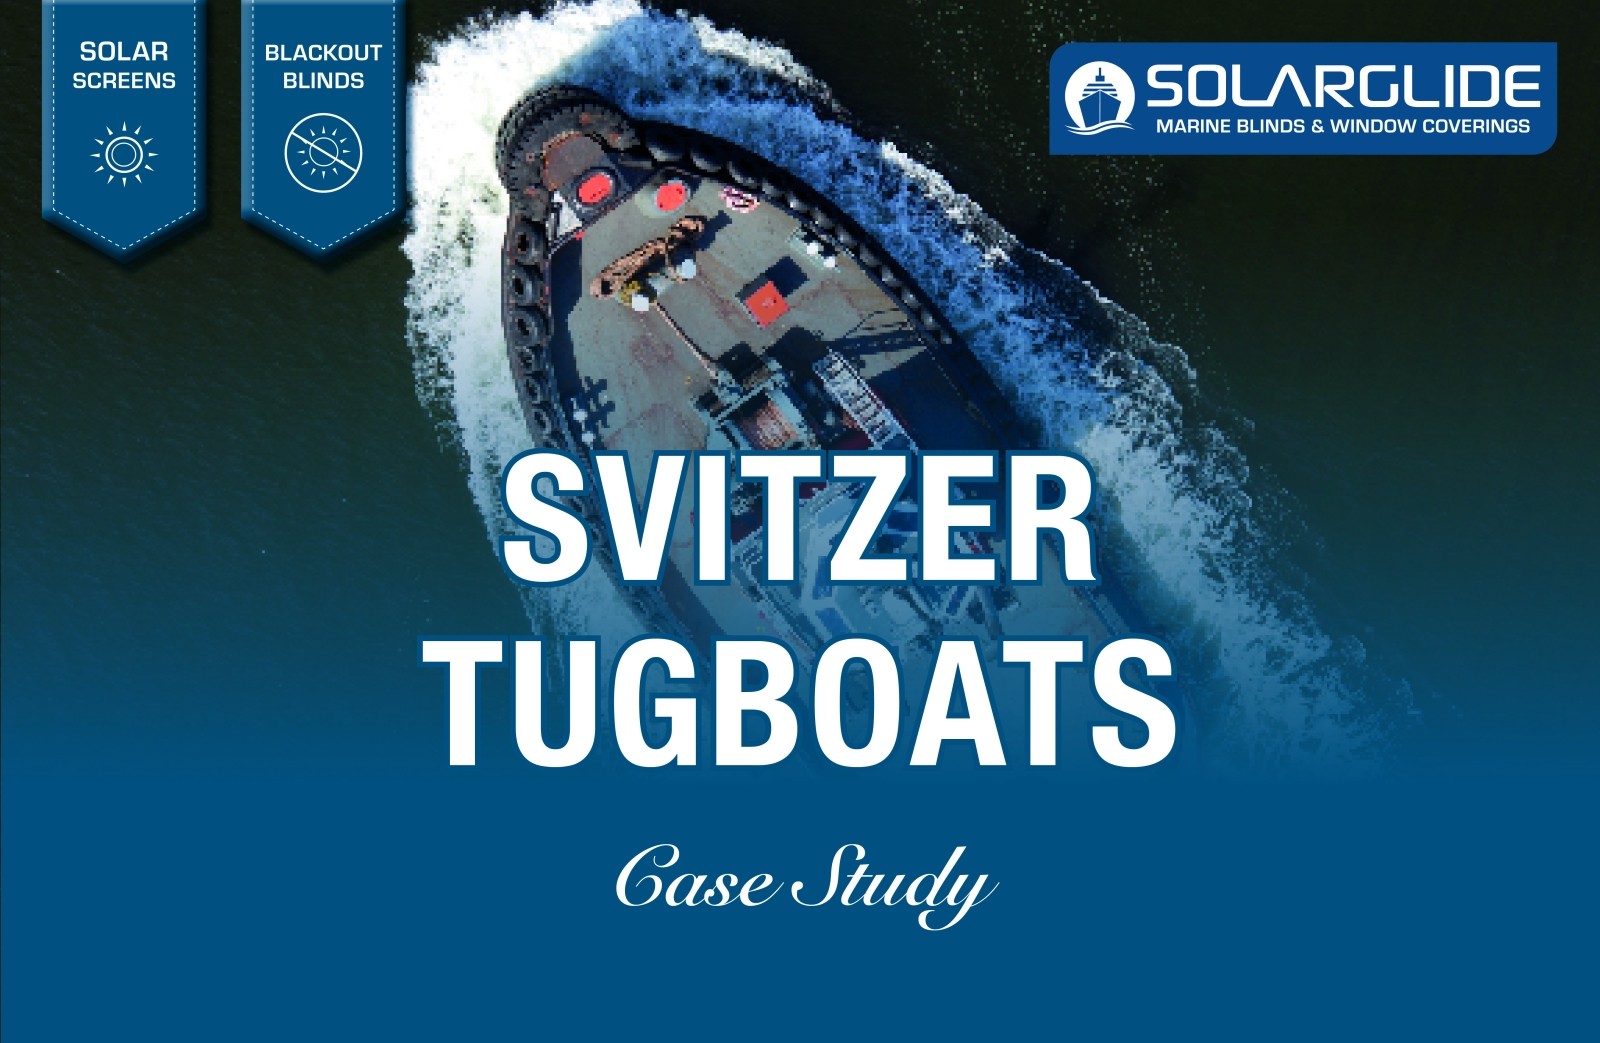 Svitzer Tugboats commission Solarglide